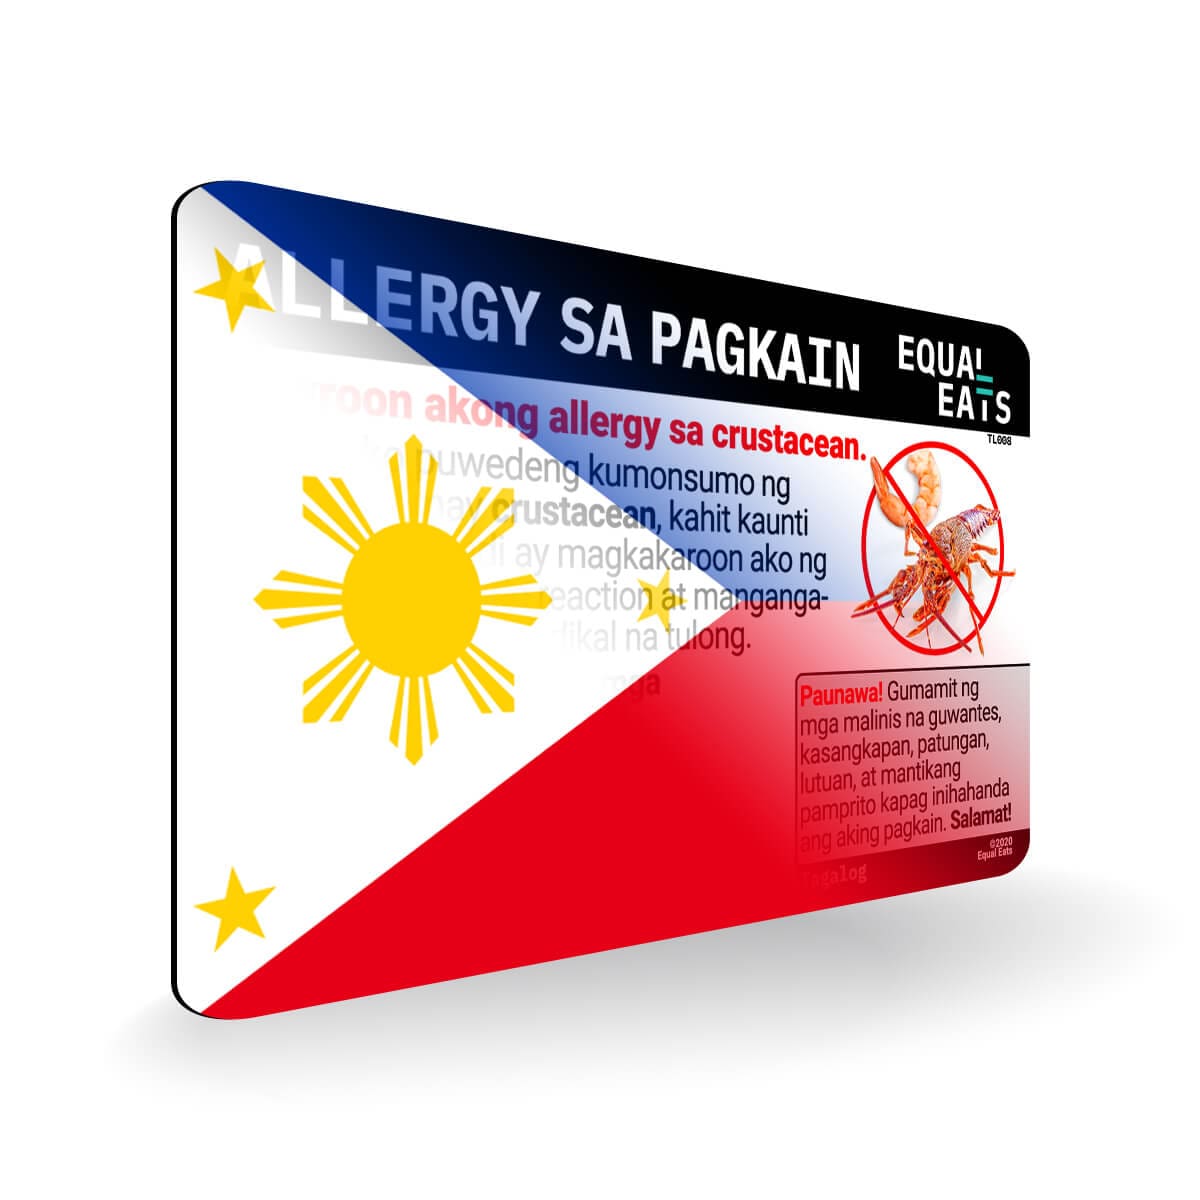 Crustacean Allergy in Tagalog. Crustacean Allergy Card for Philippines